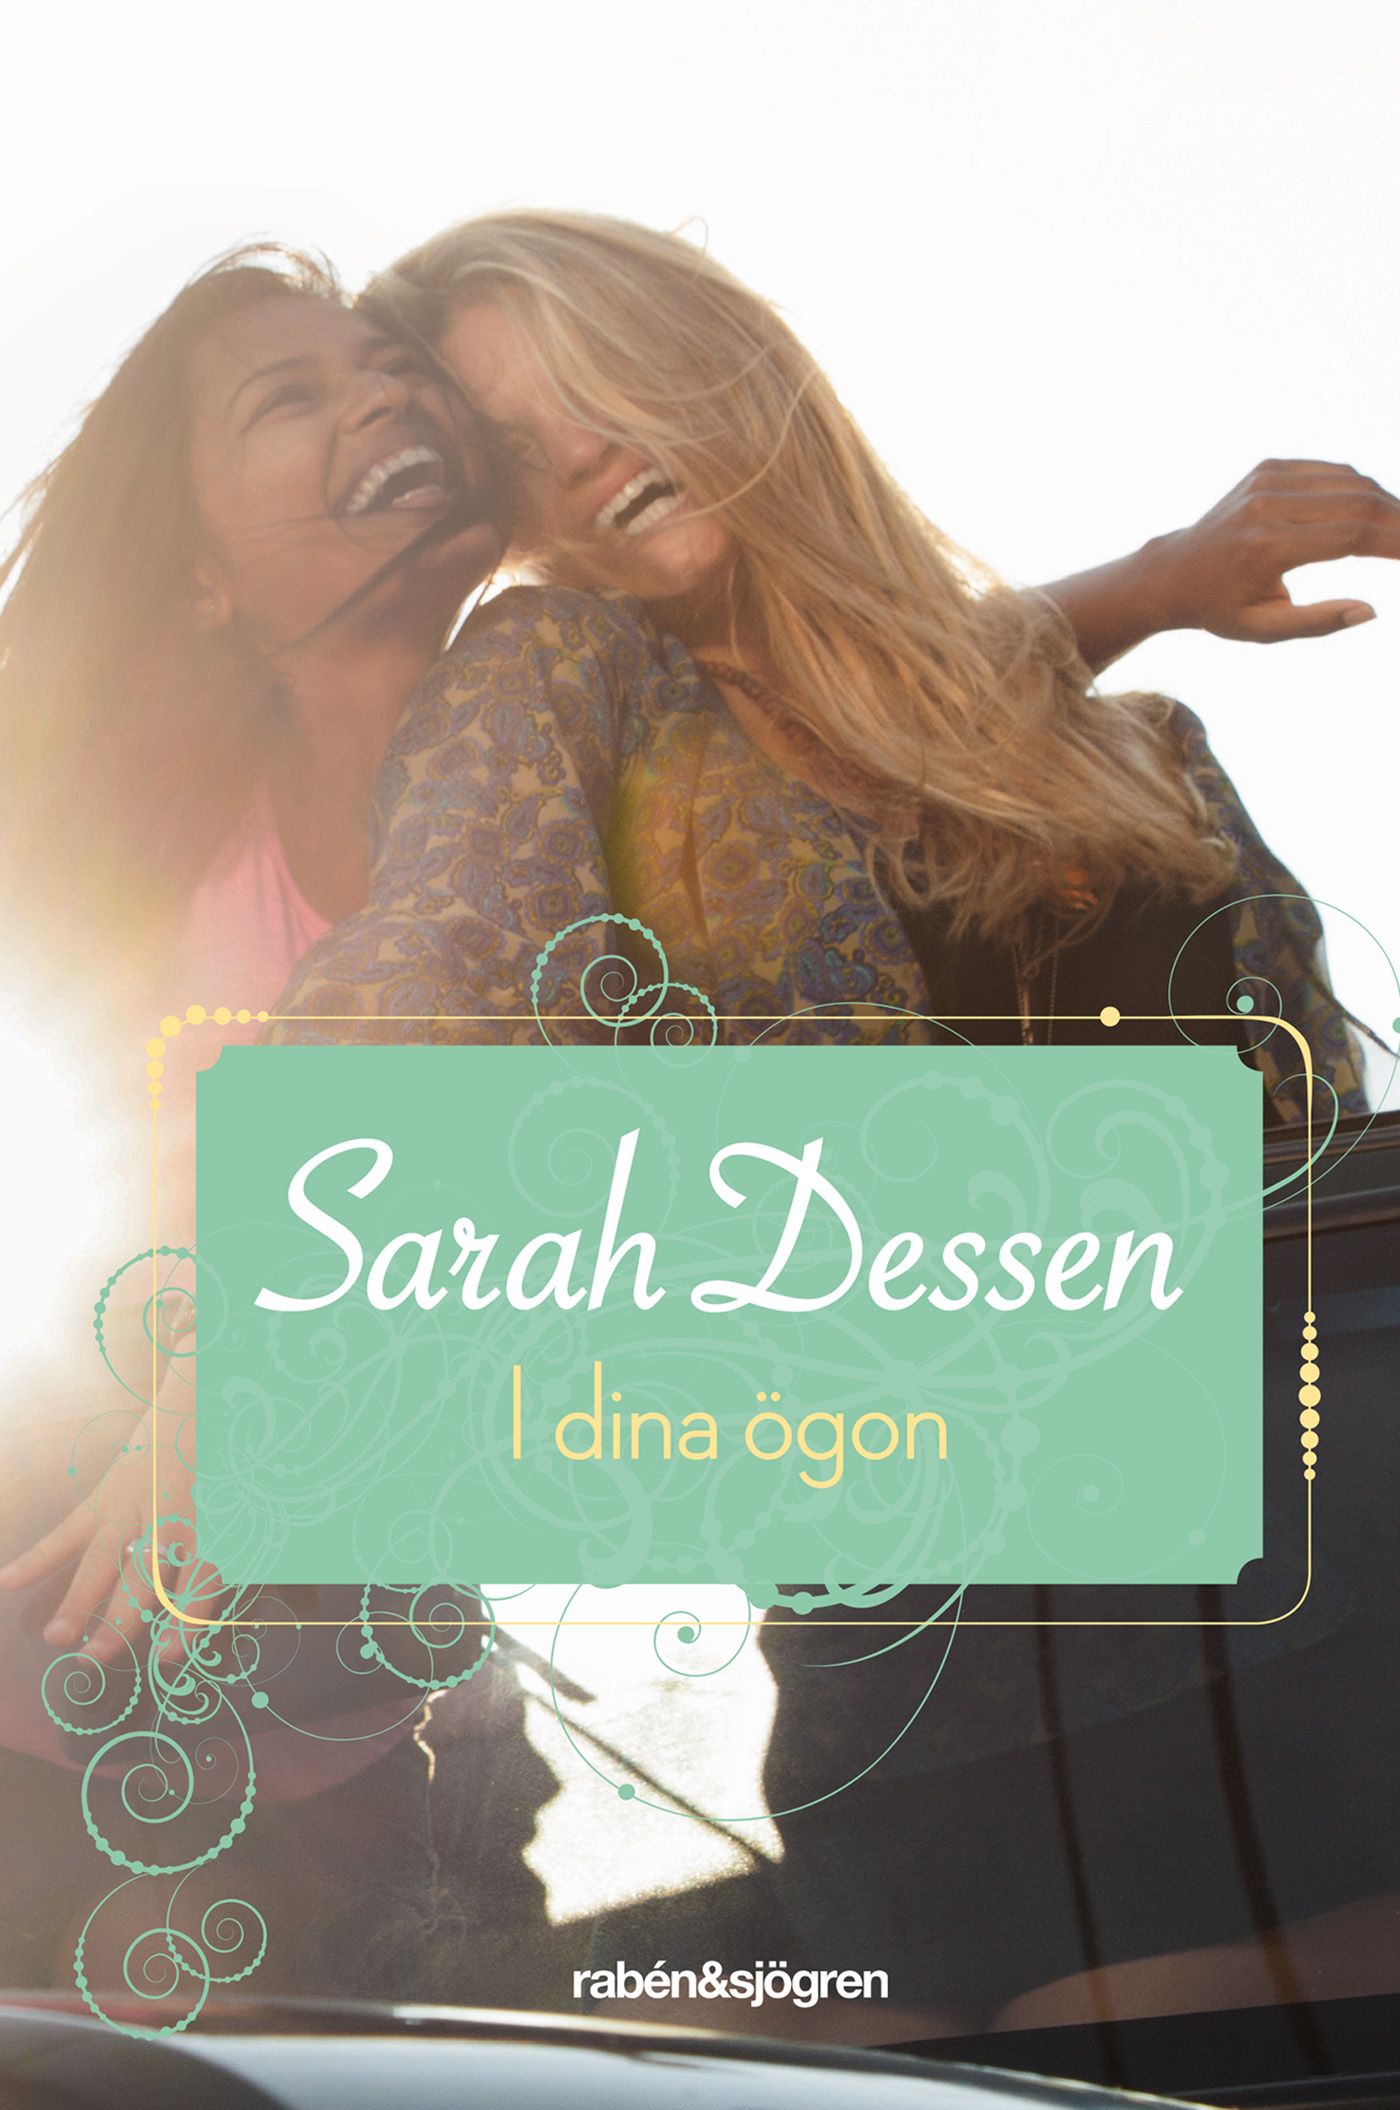 I dina ögon, e-bog af Sarah Dessen